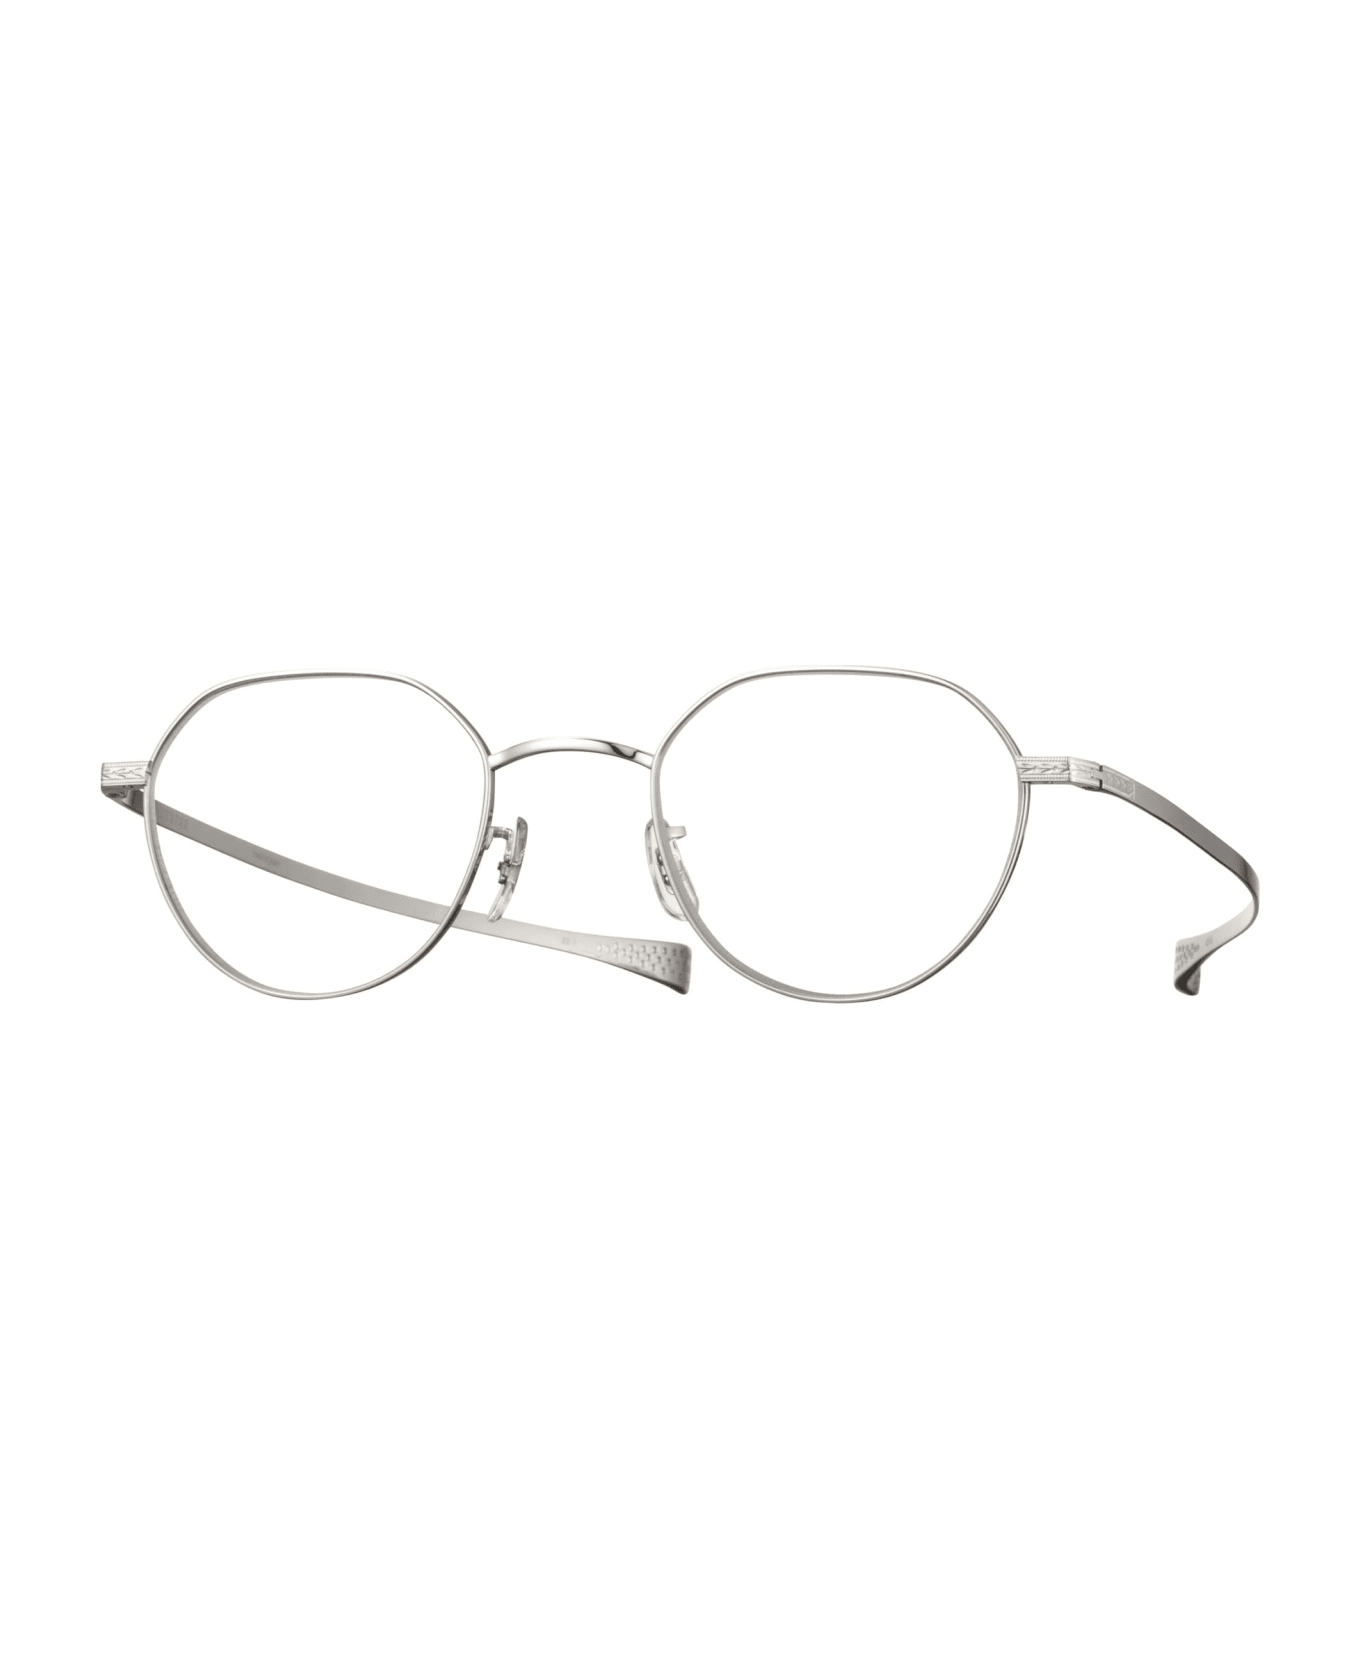 Eyevan 7285 Marshal - Silver Rx Glasses - Silver アイウェア